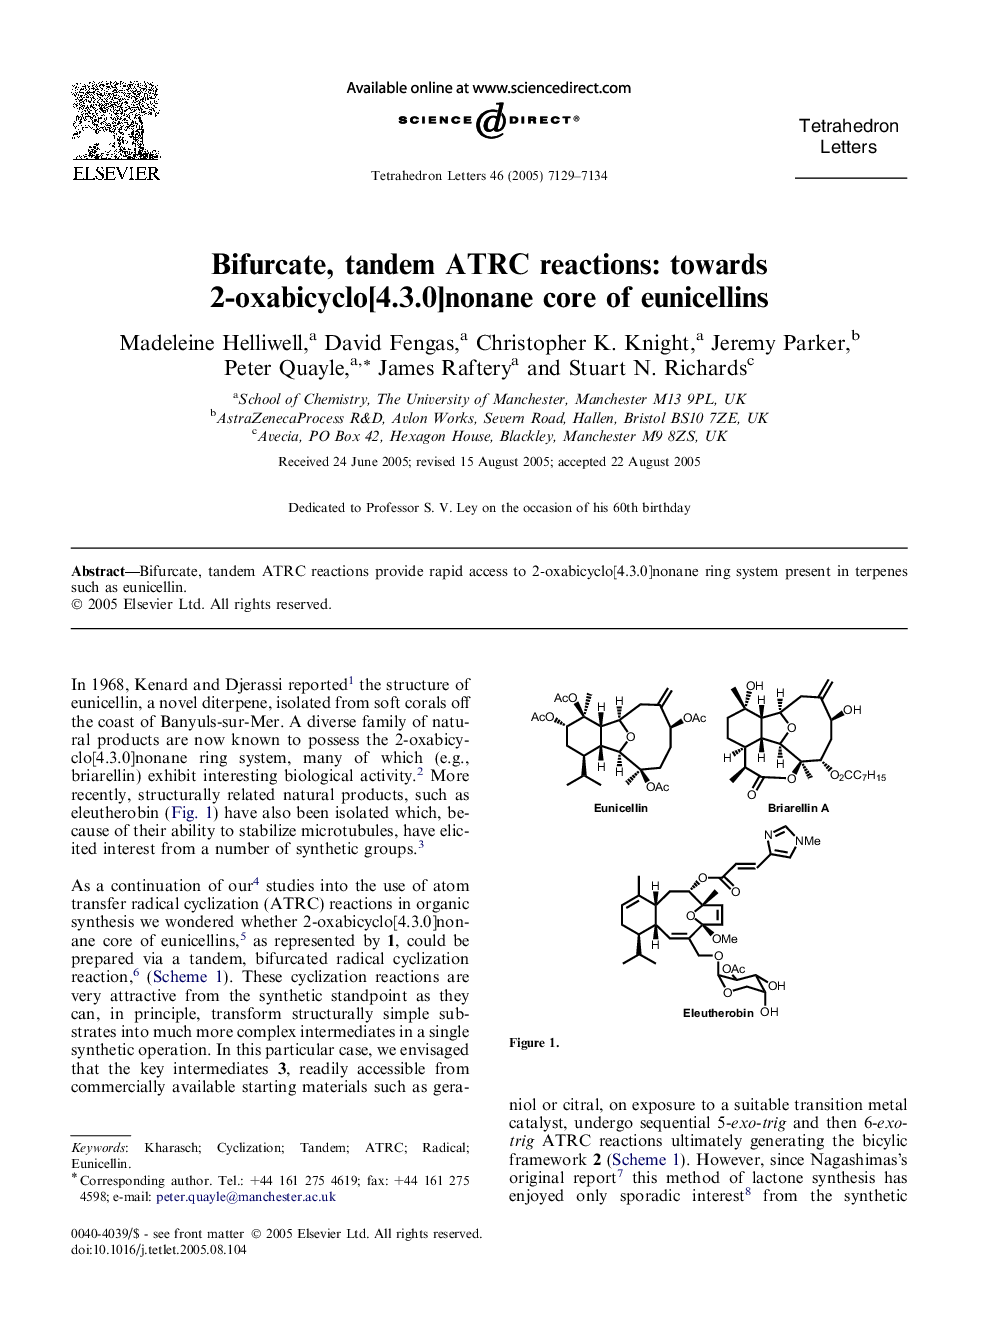 Bifurcate, tandem ATRC reactions: towards 2-oxabicyclo[4.3.0]nonane core of eunicellins